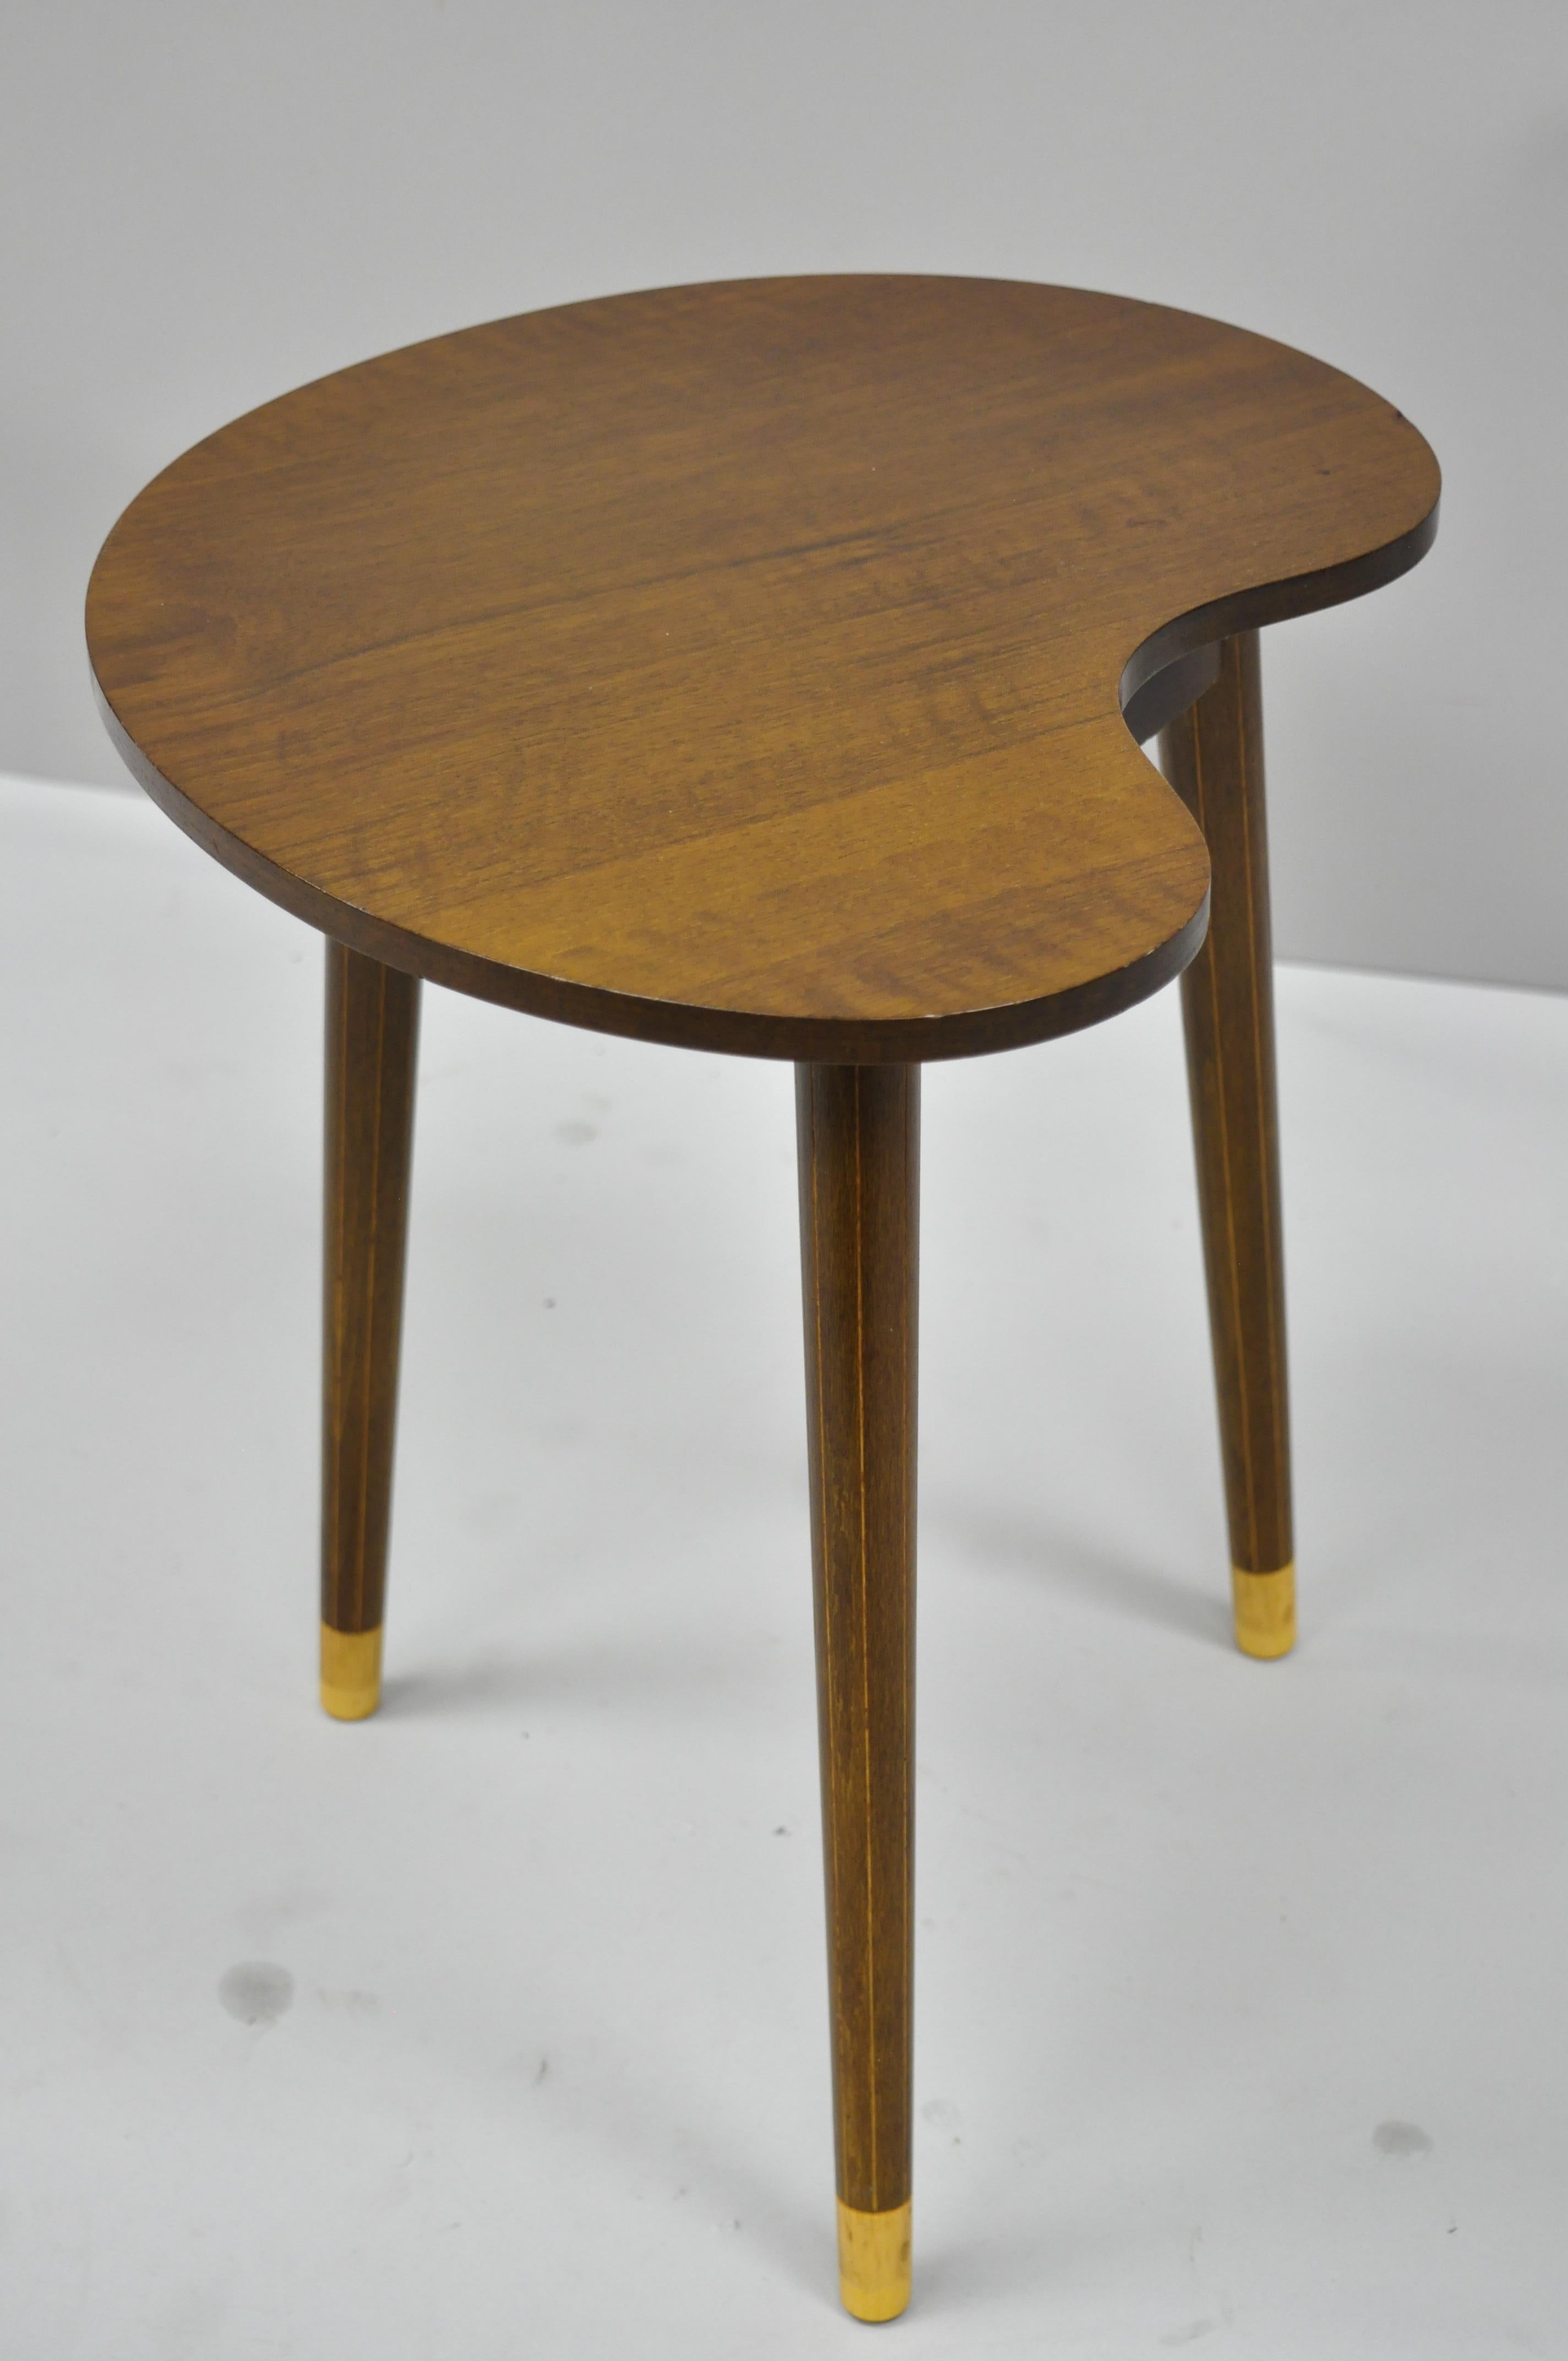 Midcentury Danish modern palette tripod side table attributed to Christensen & Larsen. Item features 